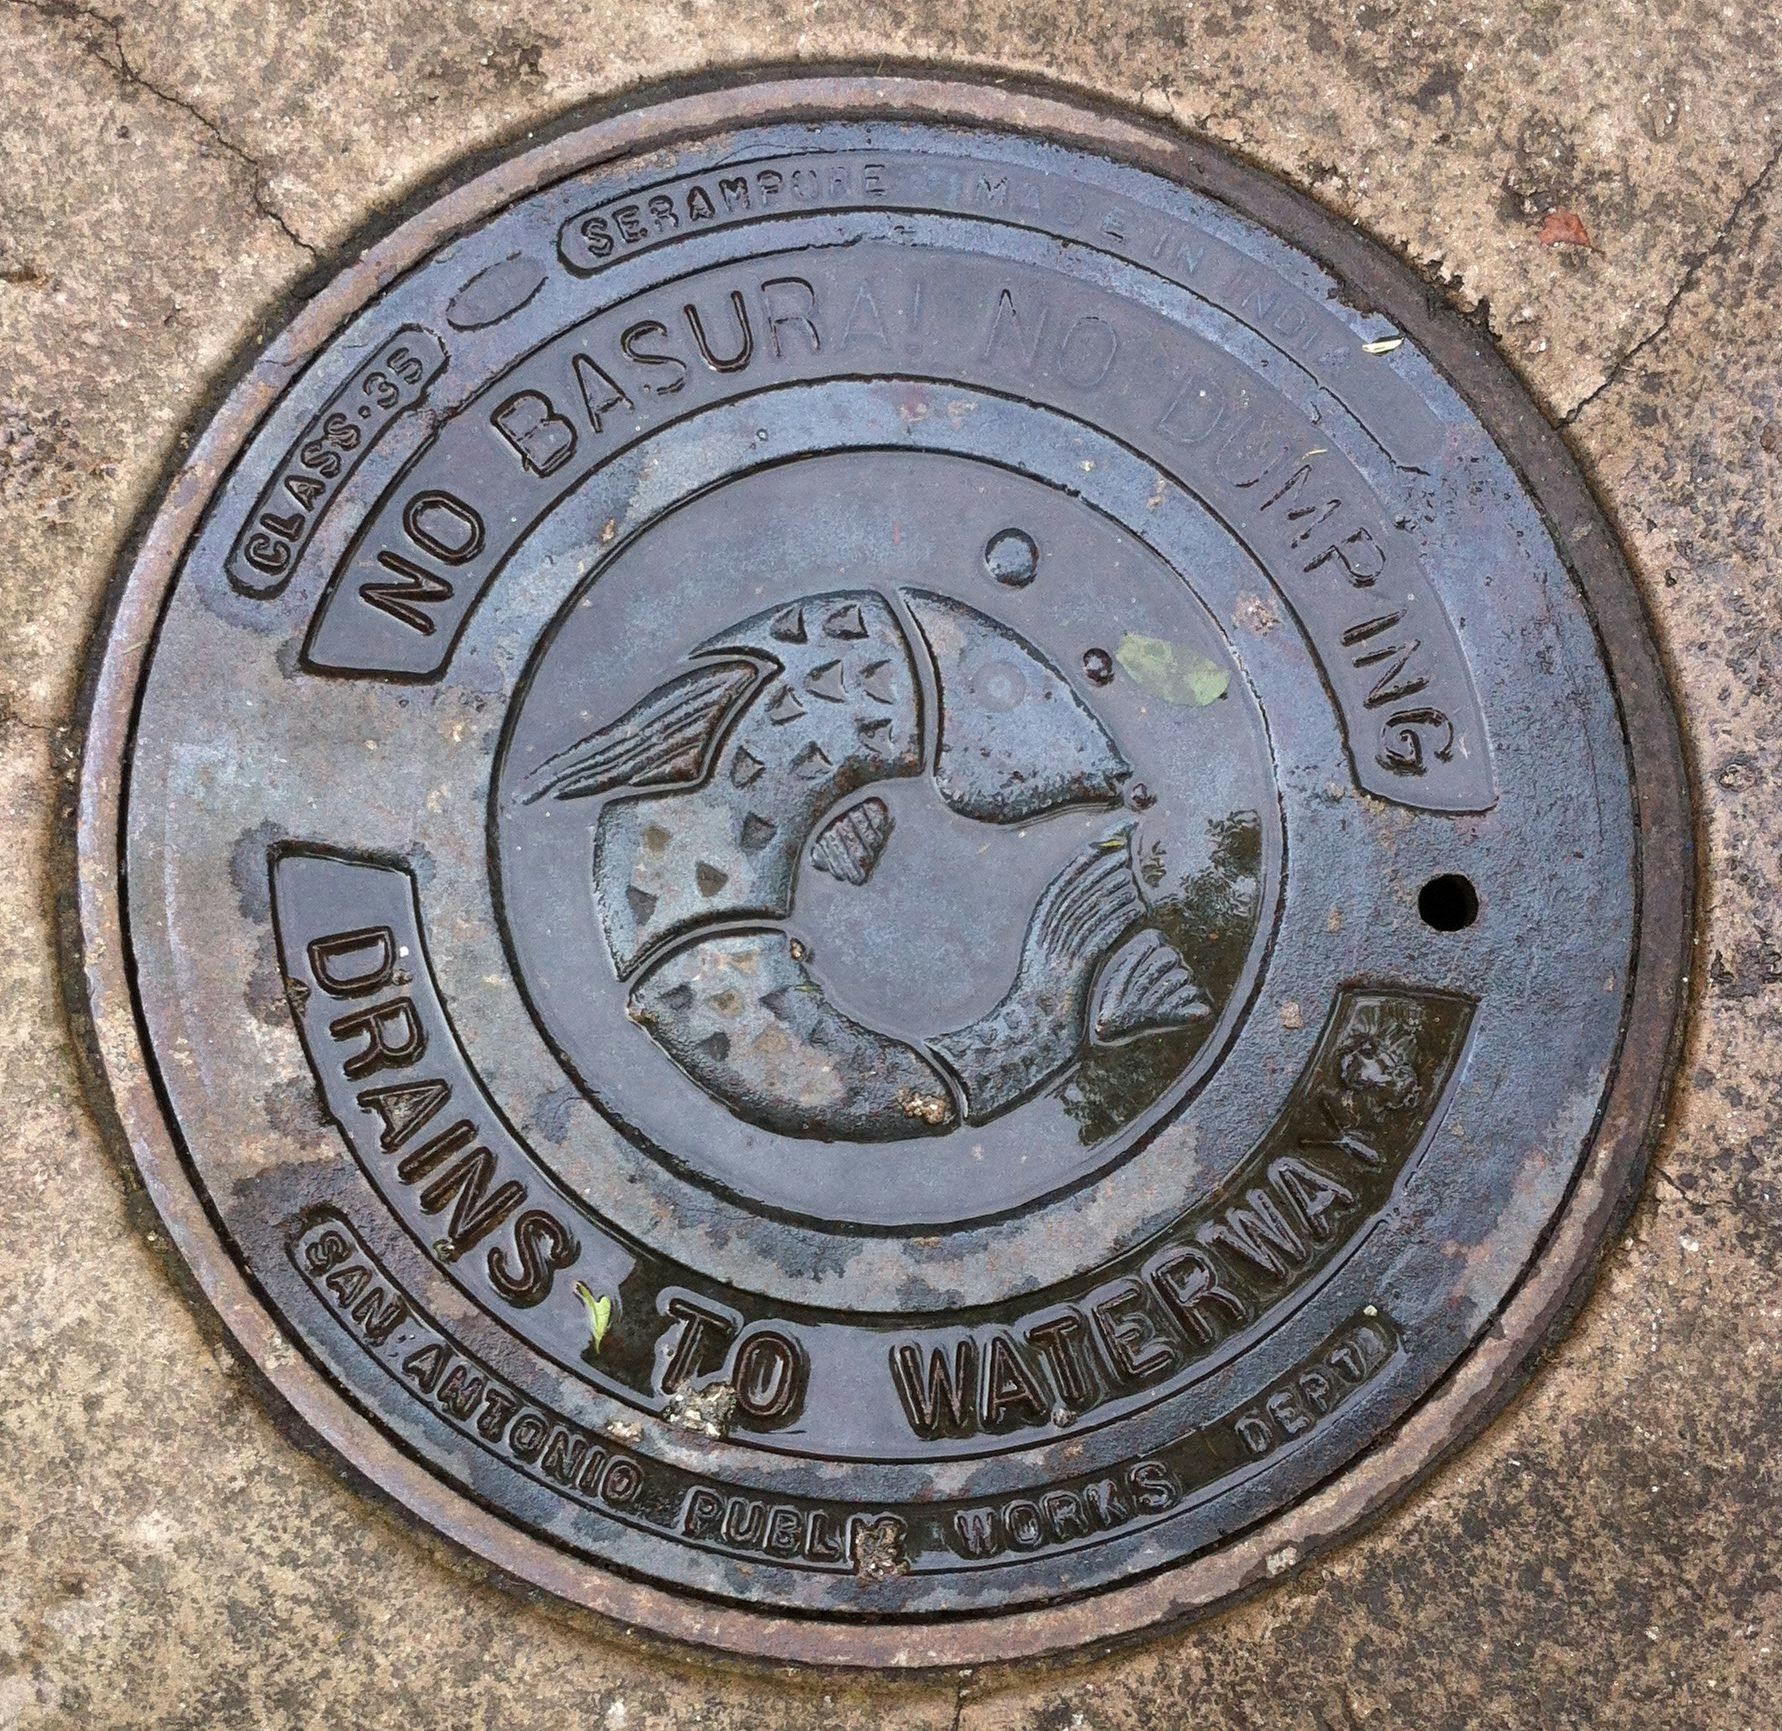 Bilingual manhole cover at San Antonio, TX zoo